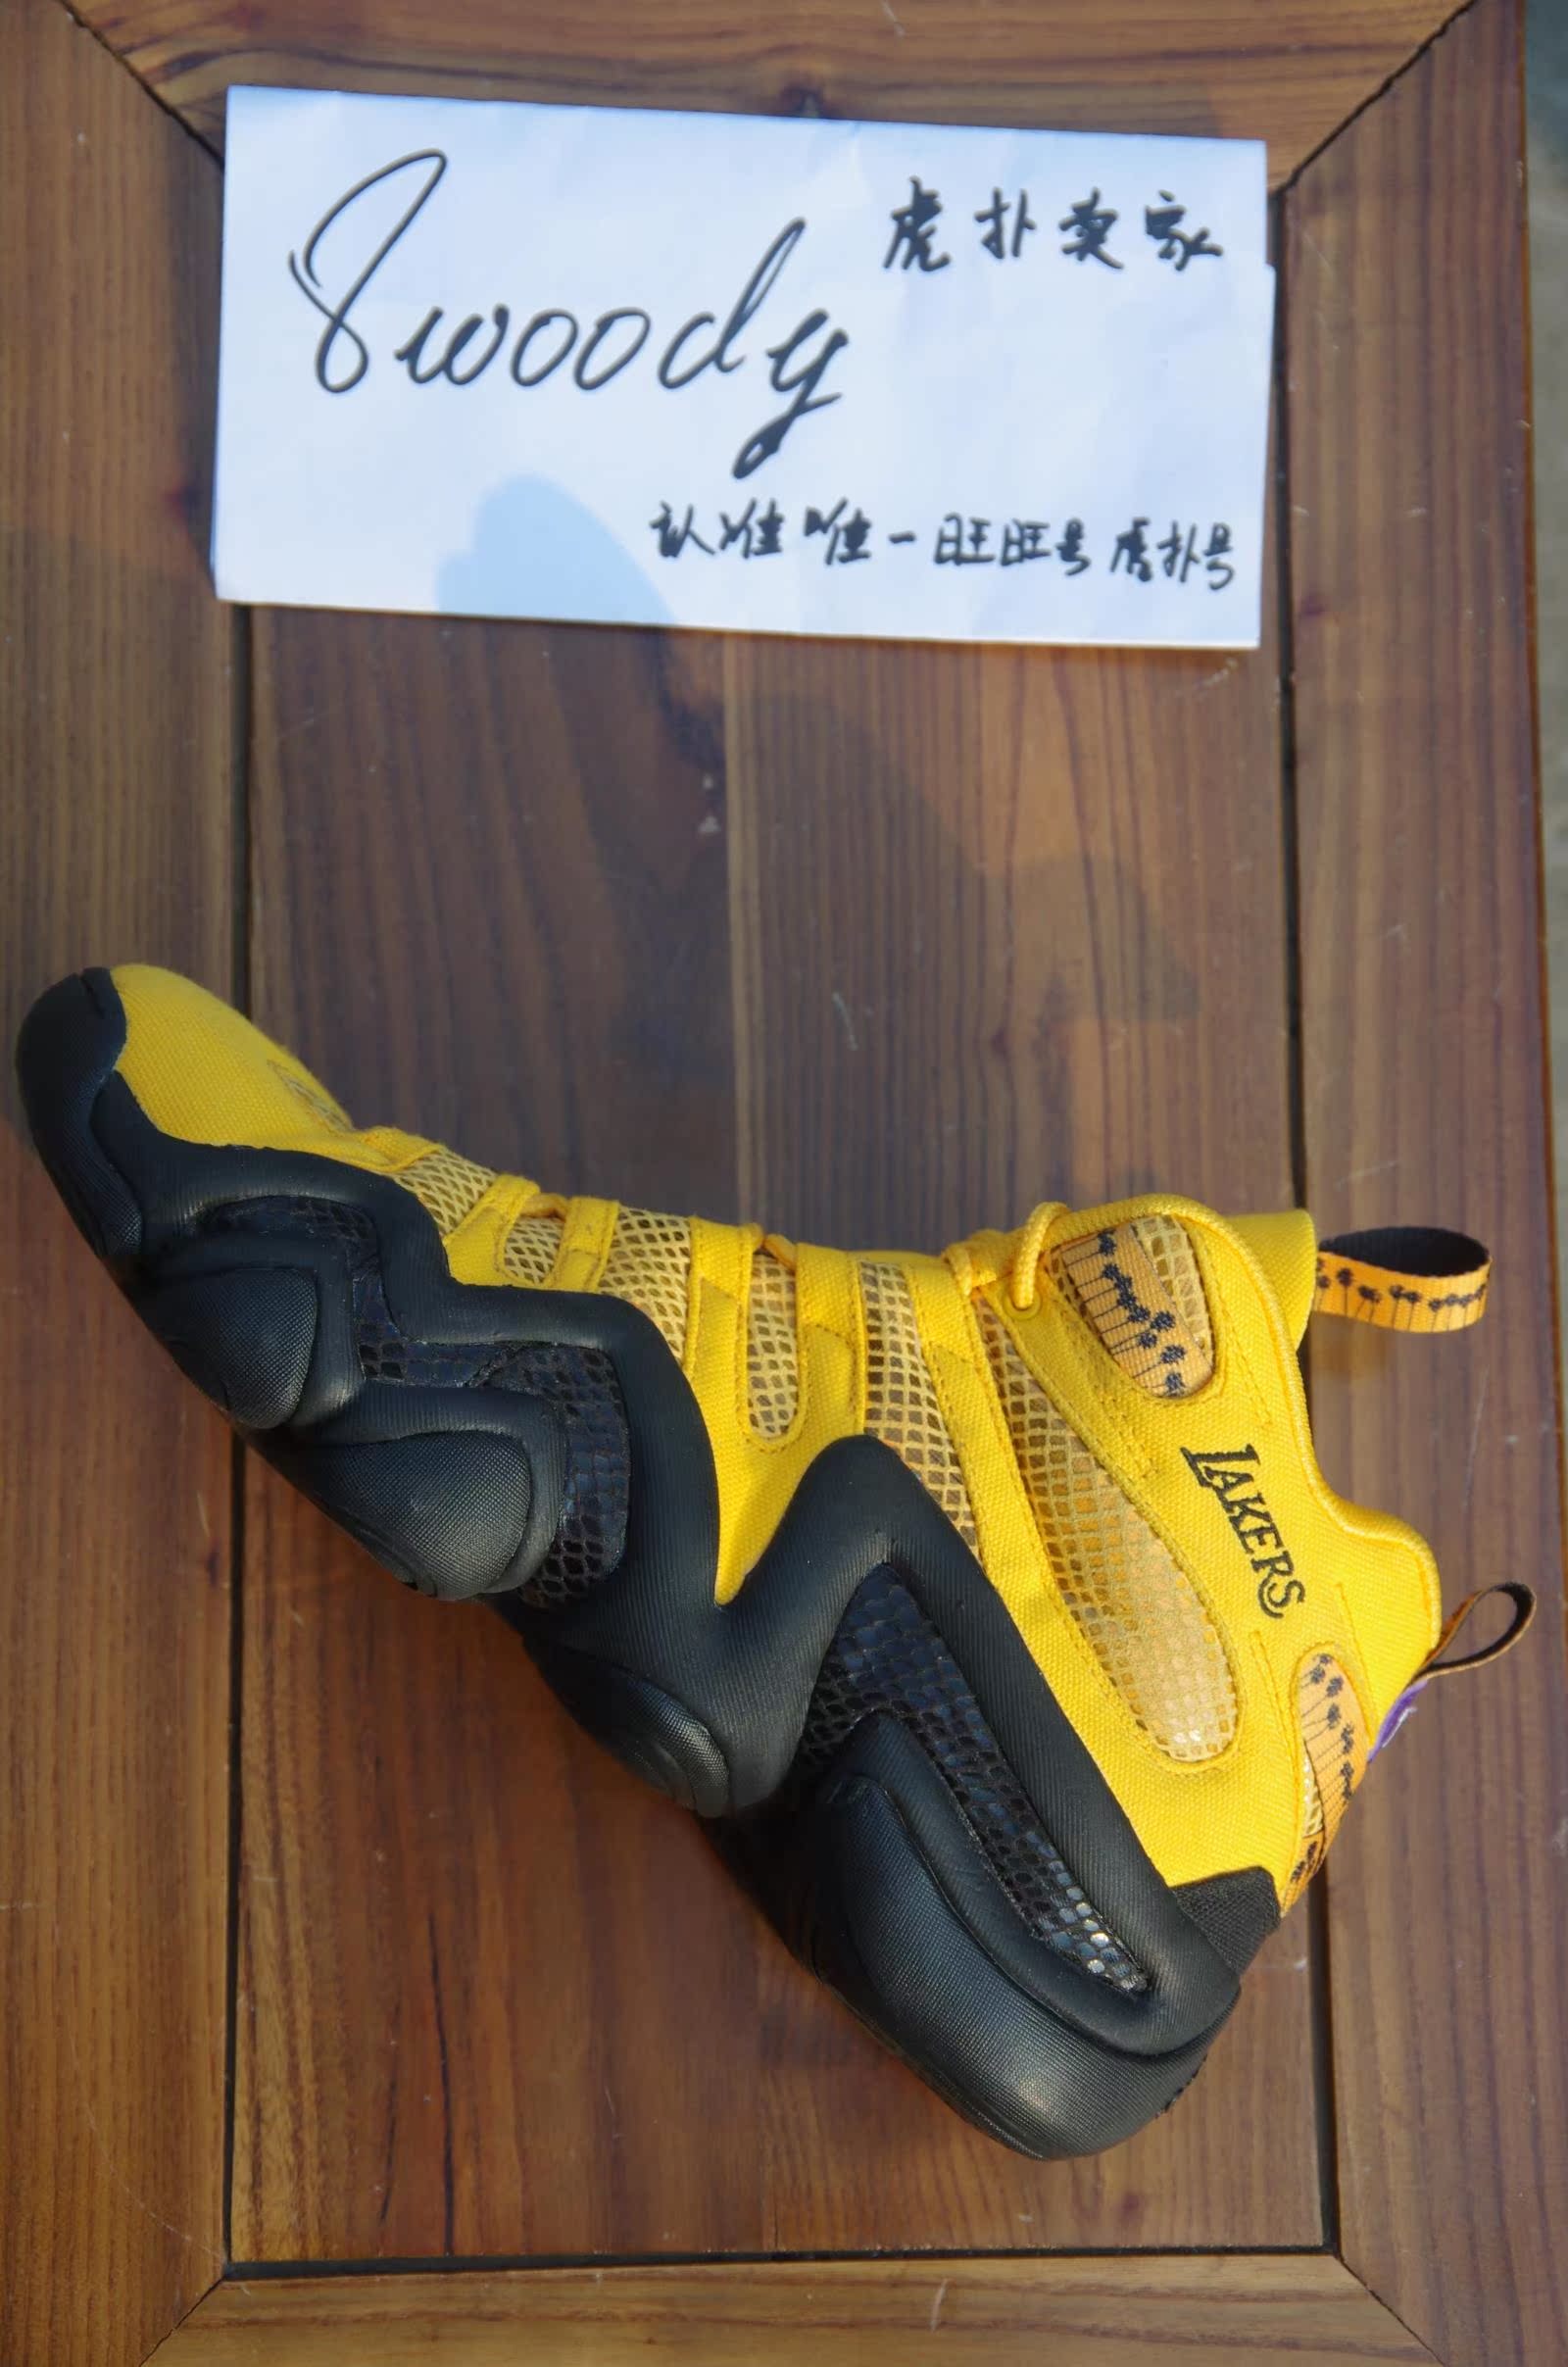 【8woody】Adidas Crazy 8湖人黑黄科比天足篮球鞋S83936